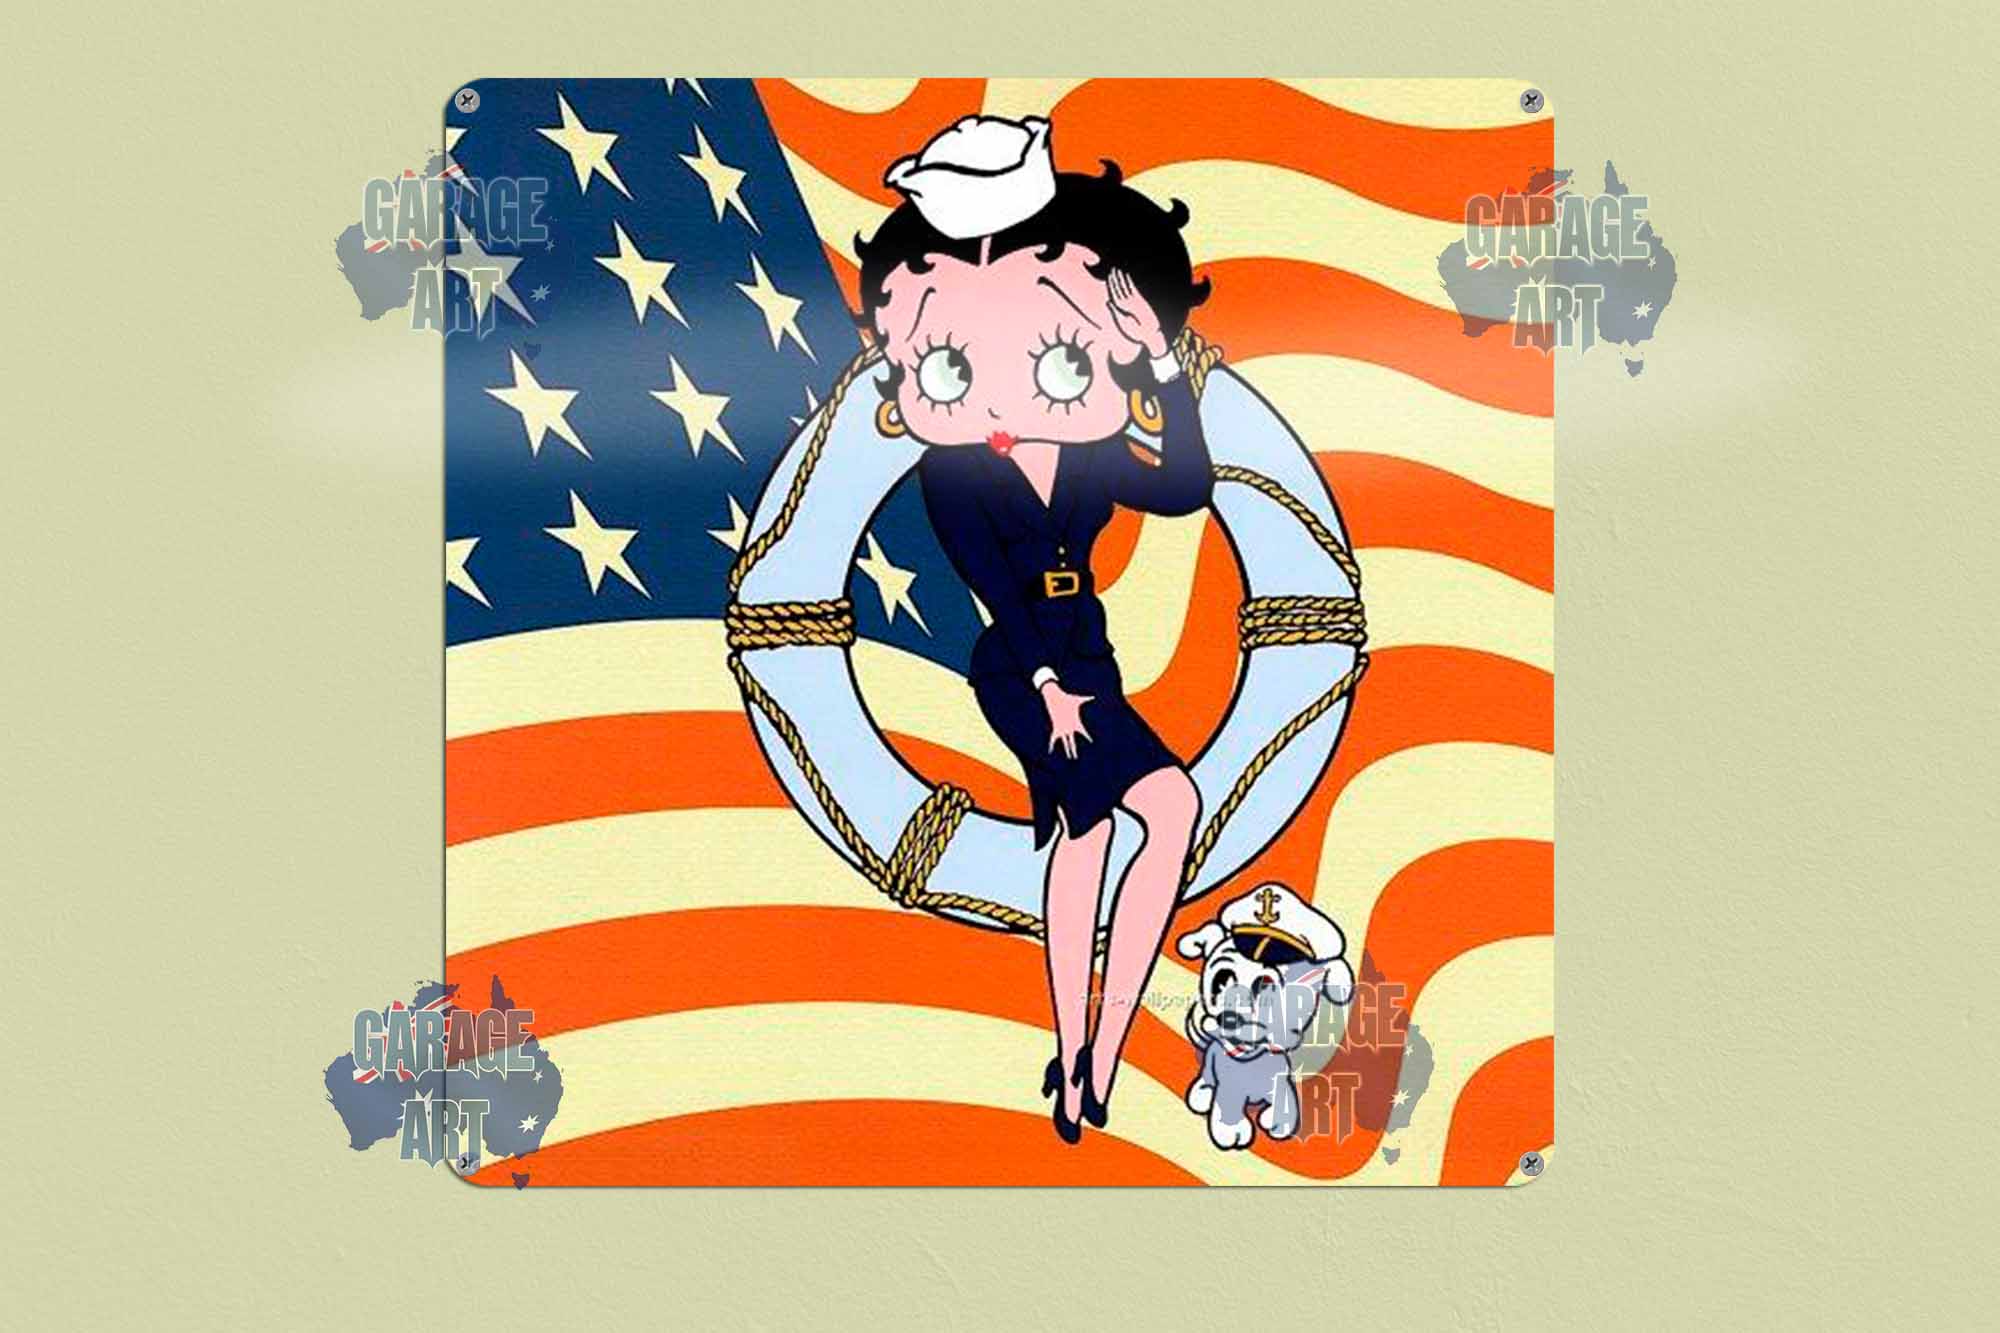 Betty Boop Sailor 300mmx300mm Tin Sign freeshipping - garageartaustralia